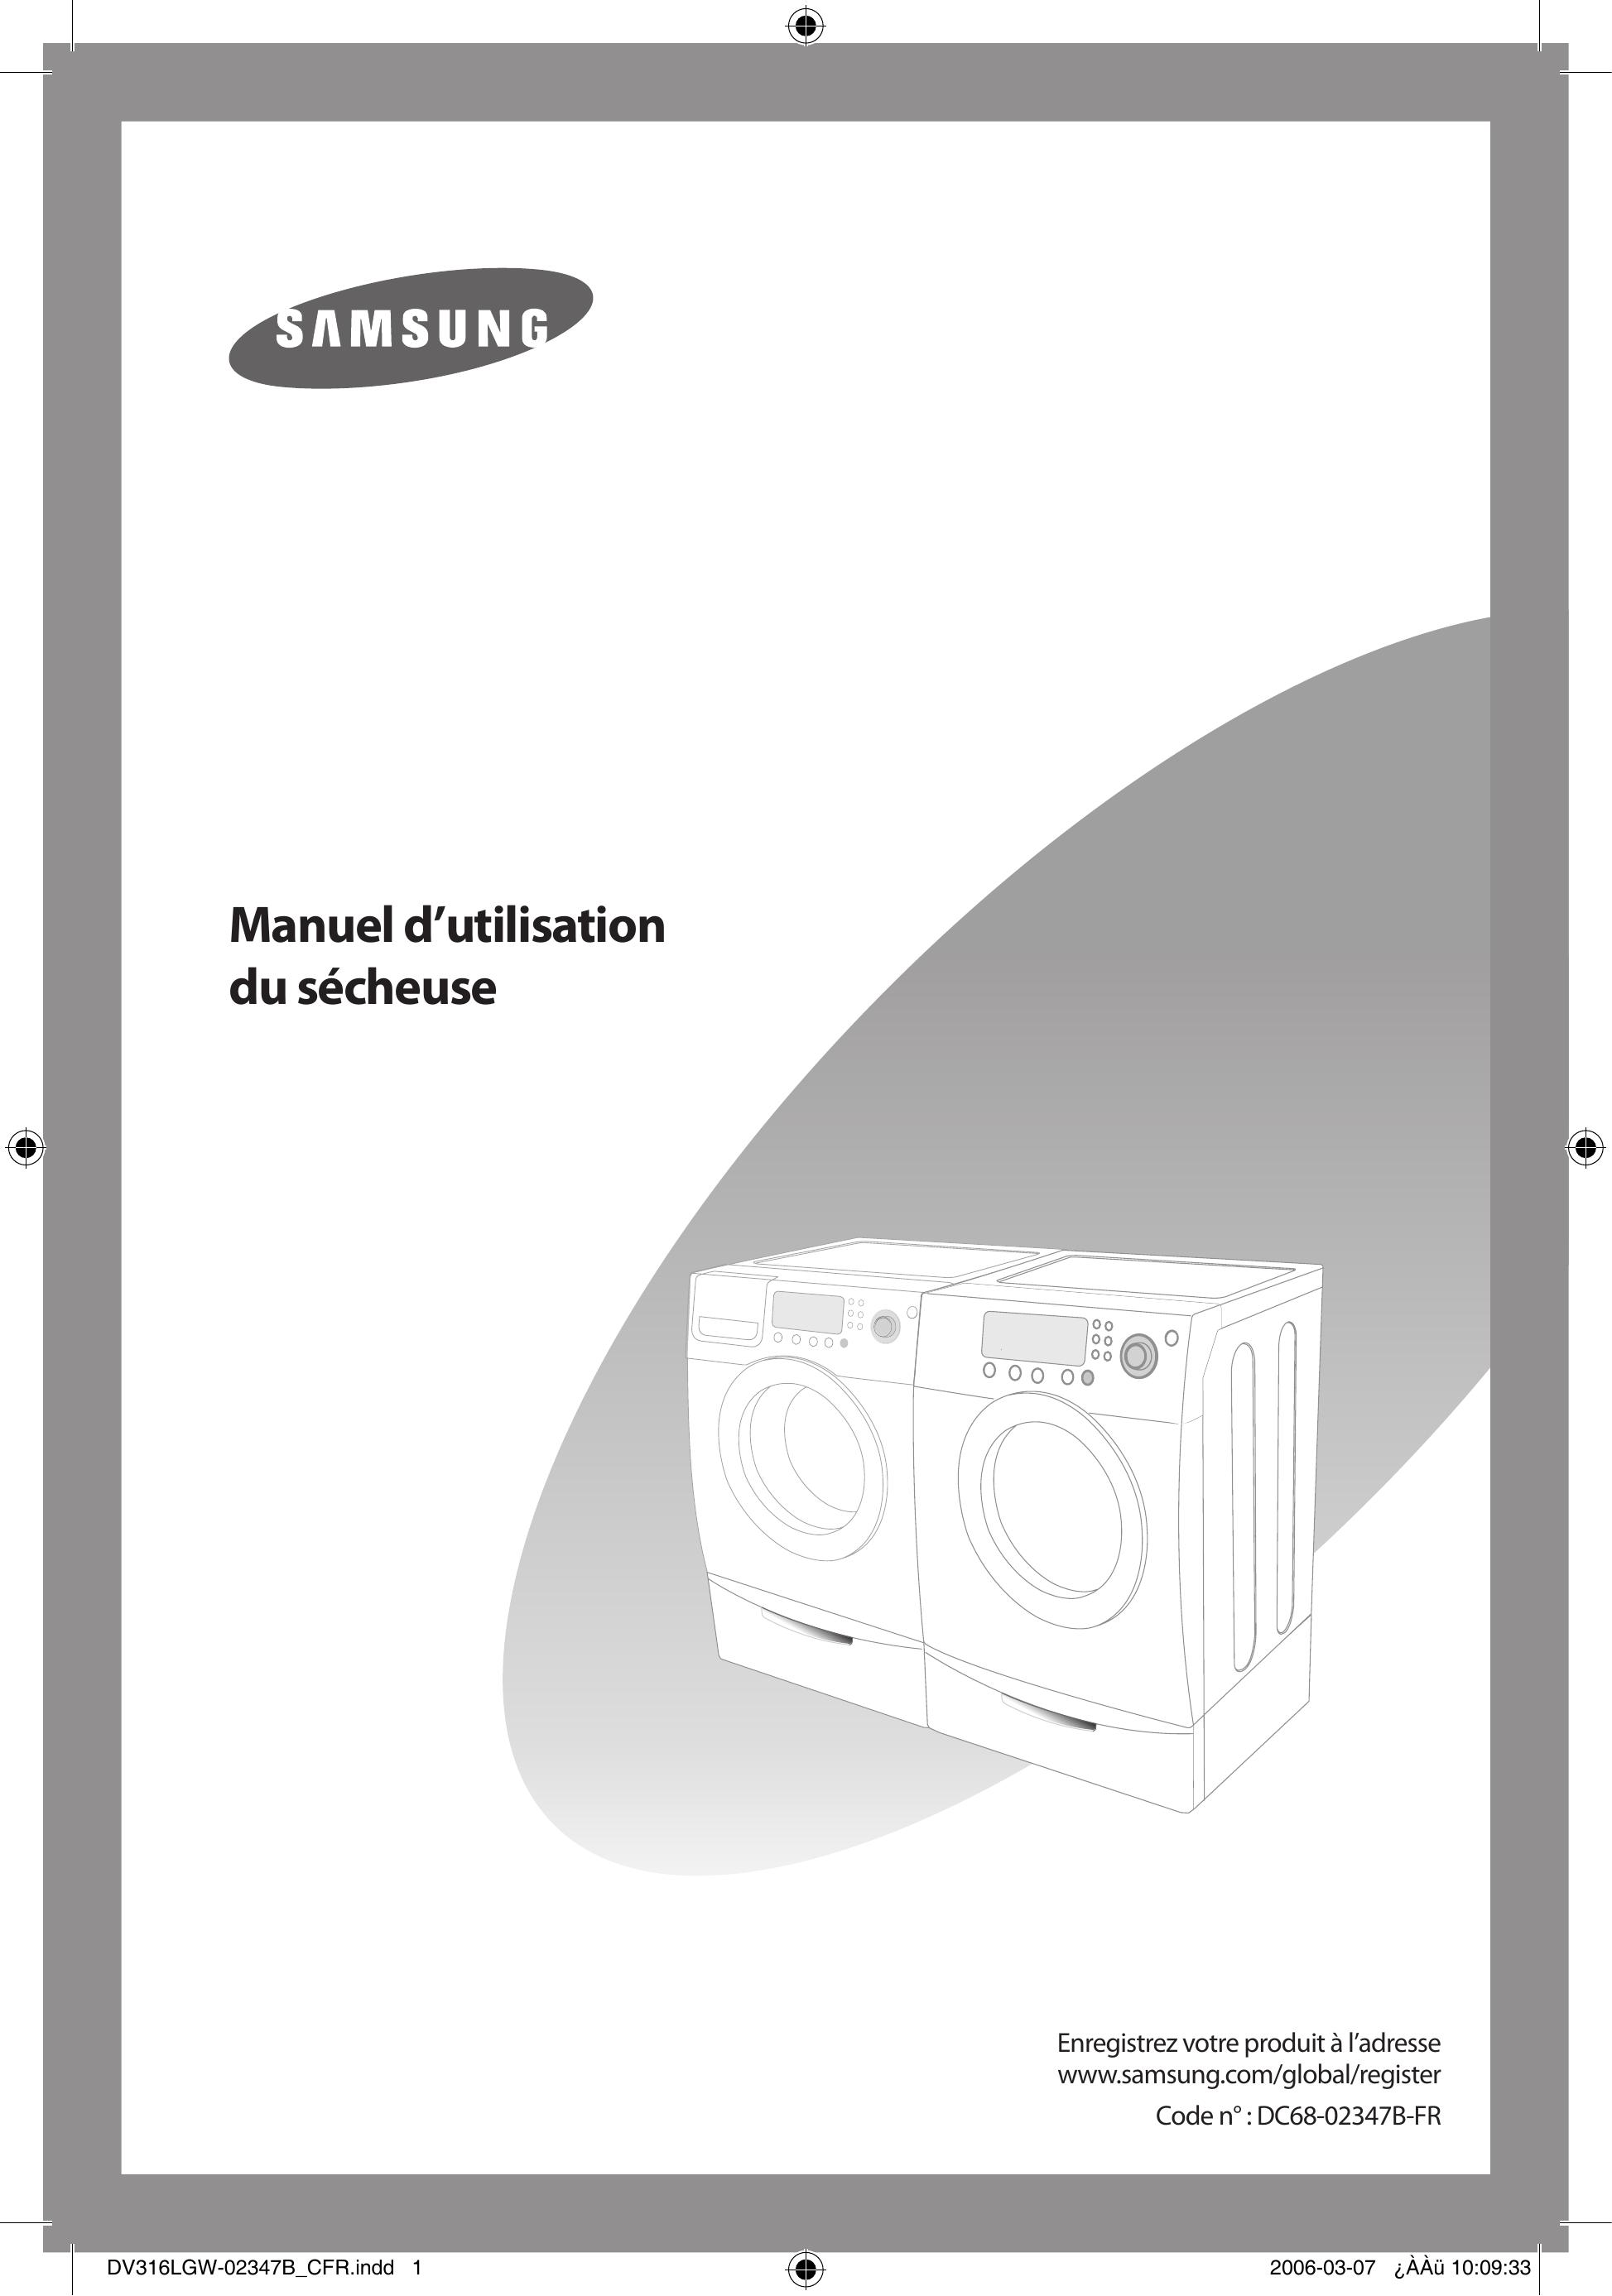 Samsung DC68-02347B-FR Washer User Manual